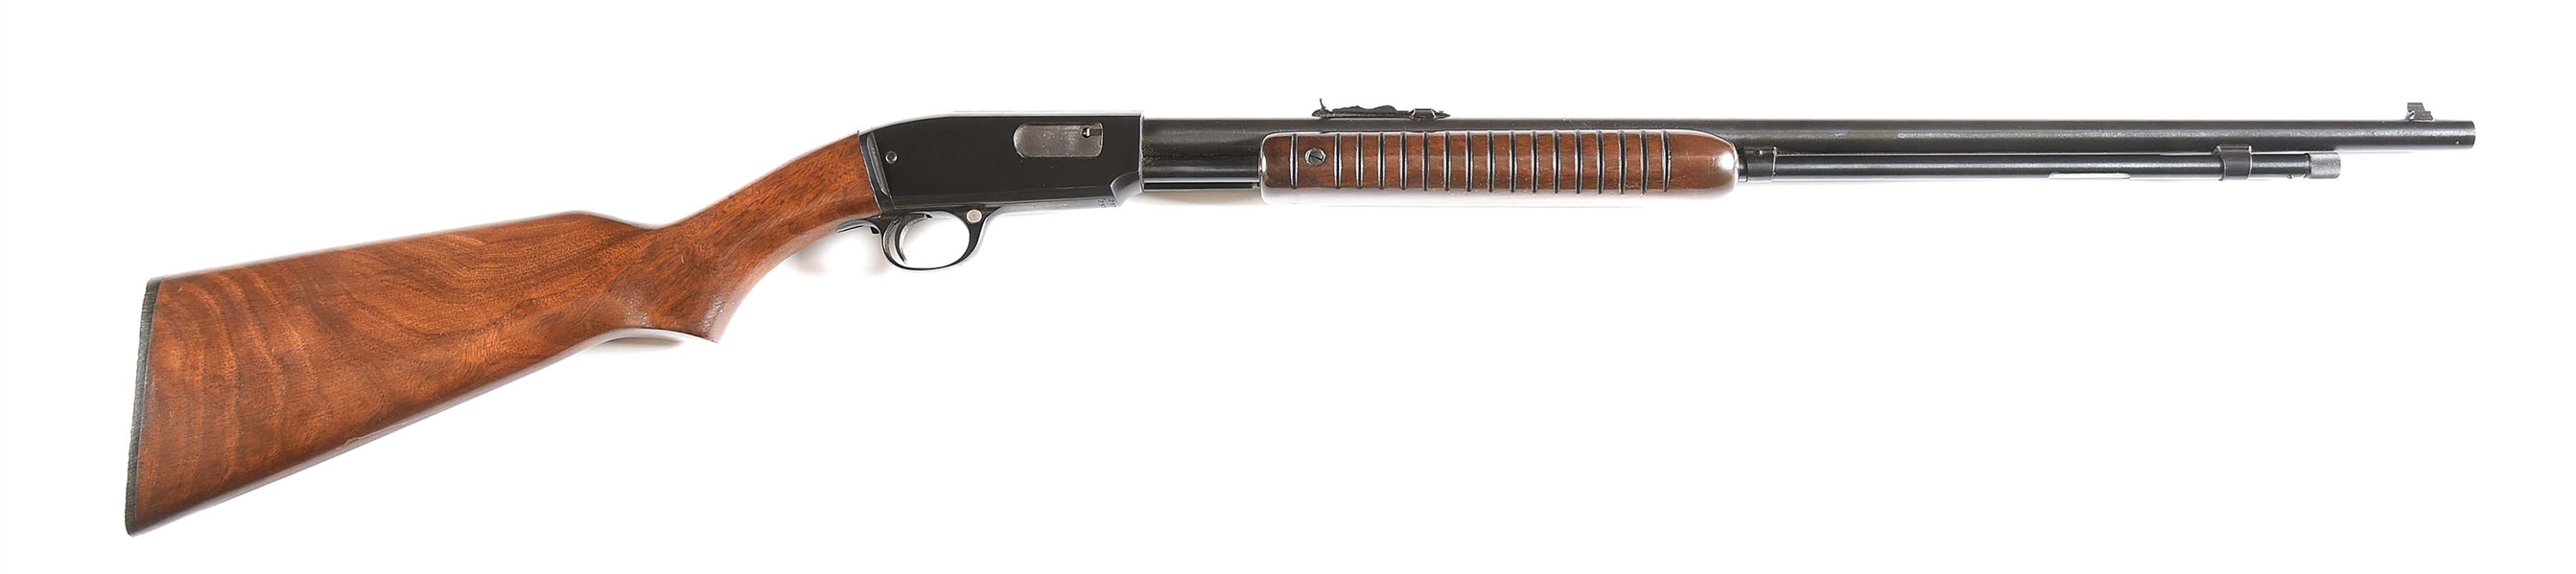 Winchester Model Rifle With Scope Barnebys My XXX Hot Girl